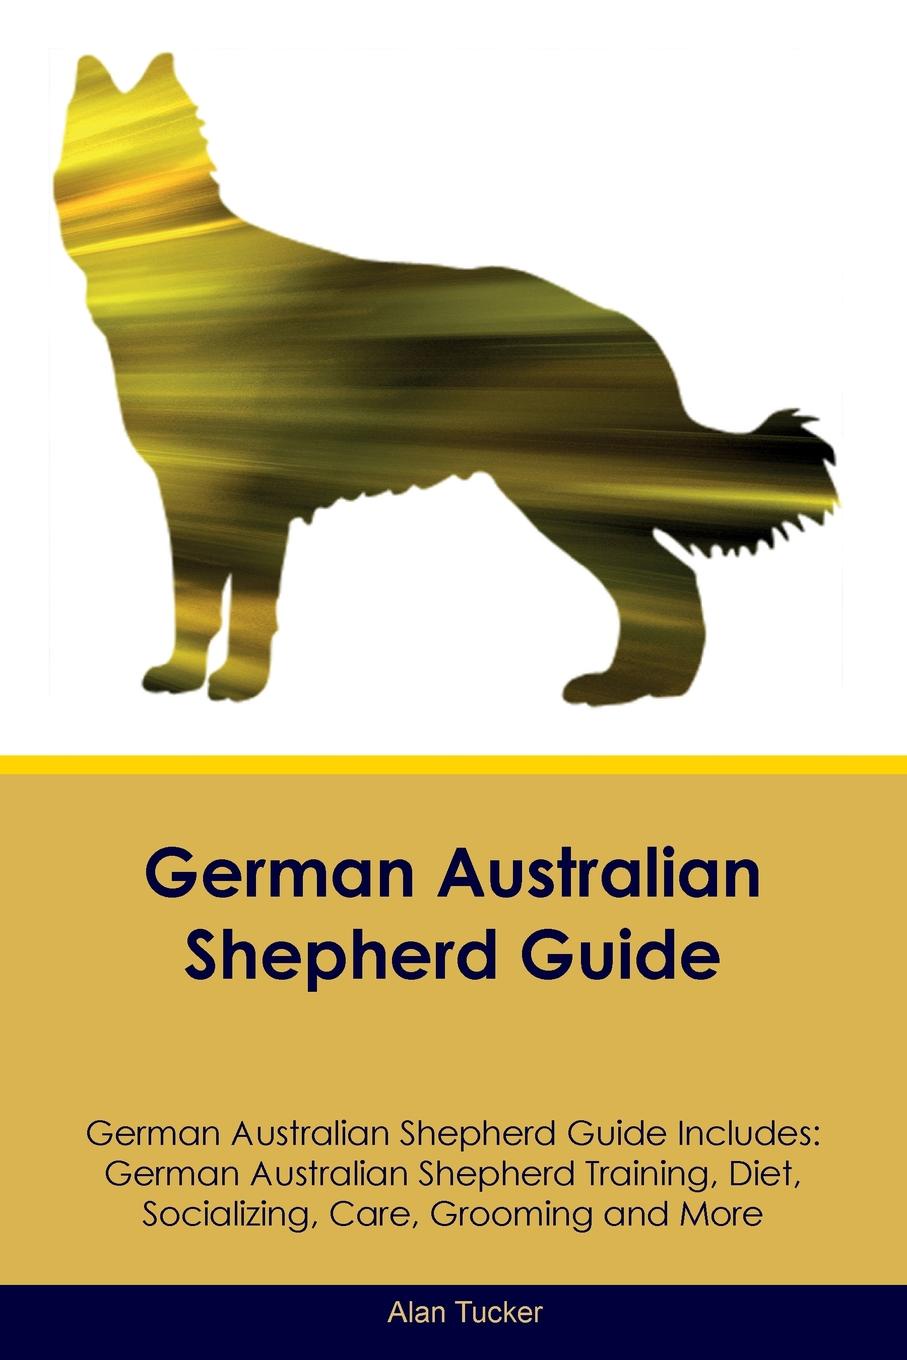 German Australian Shepherd Guide German Australian Shepherd Guide Includes. German Australian Shepherd Training, Diet, Socializing, Care, Grooming, Breeding and More